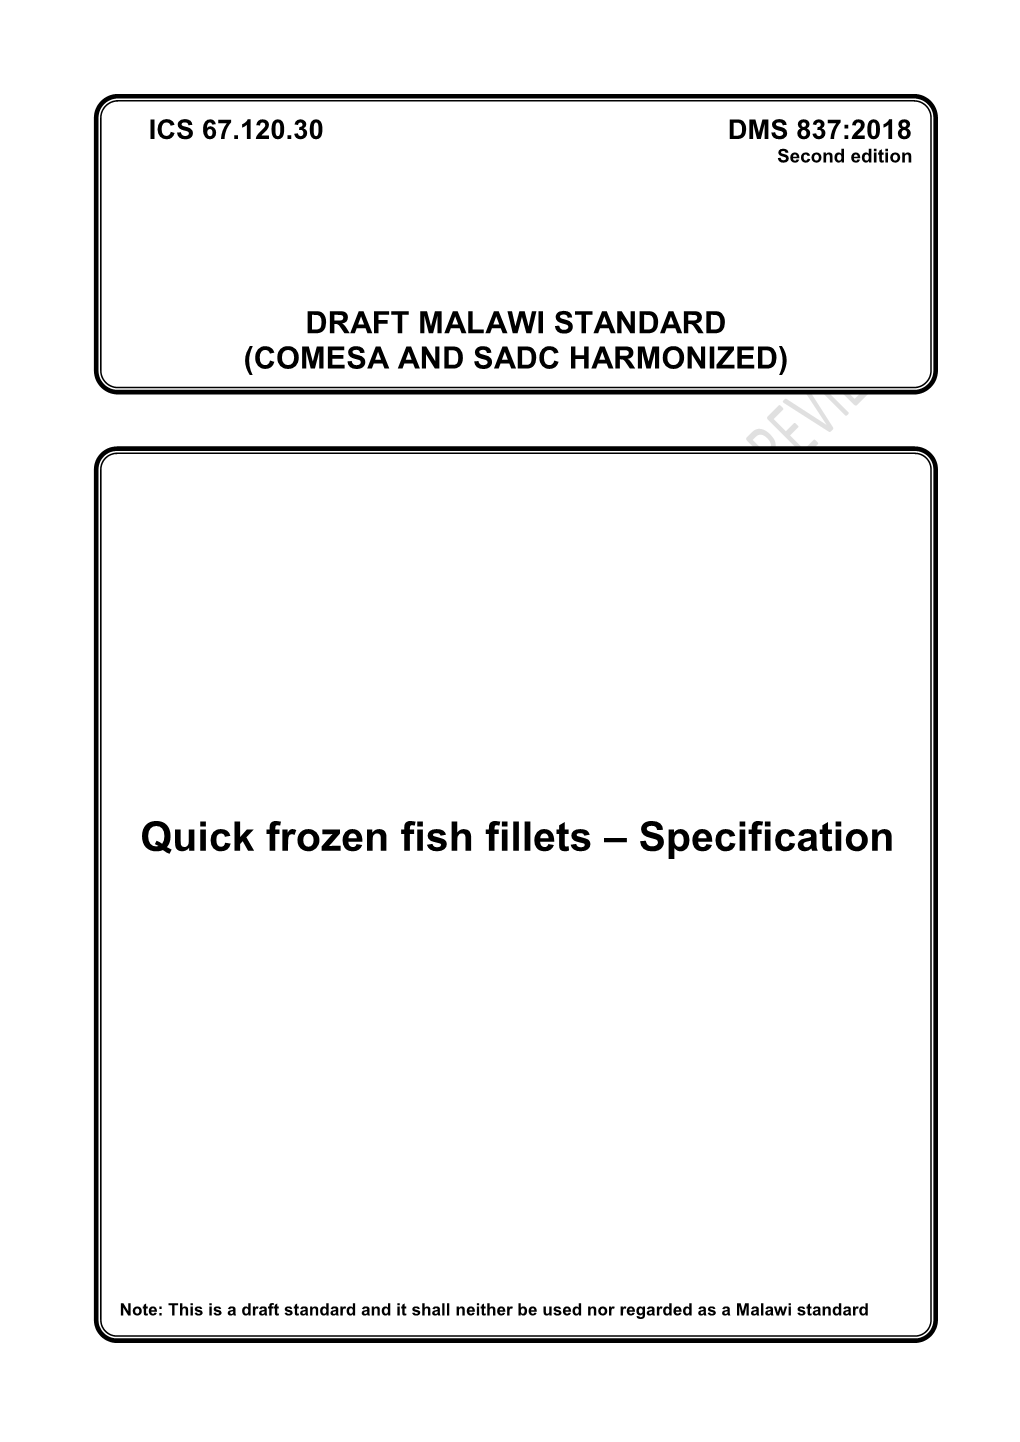 Quick Frozen Fish Fillets – Specification